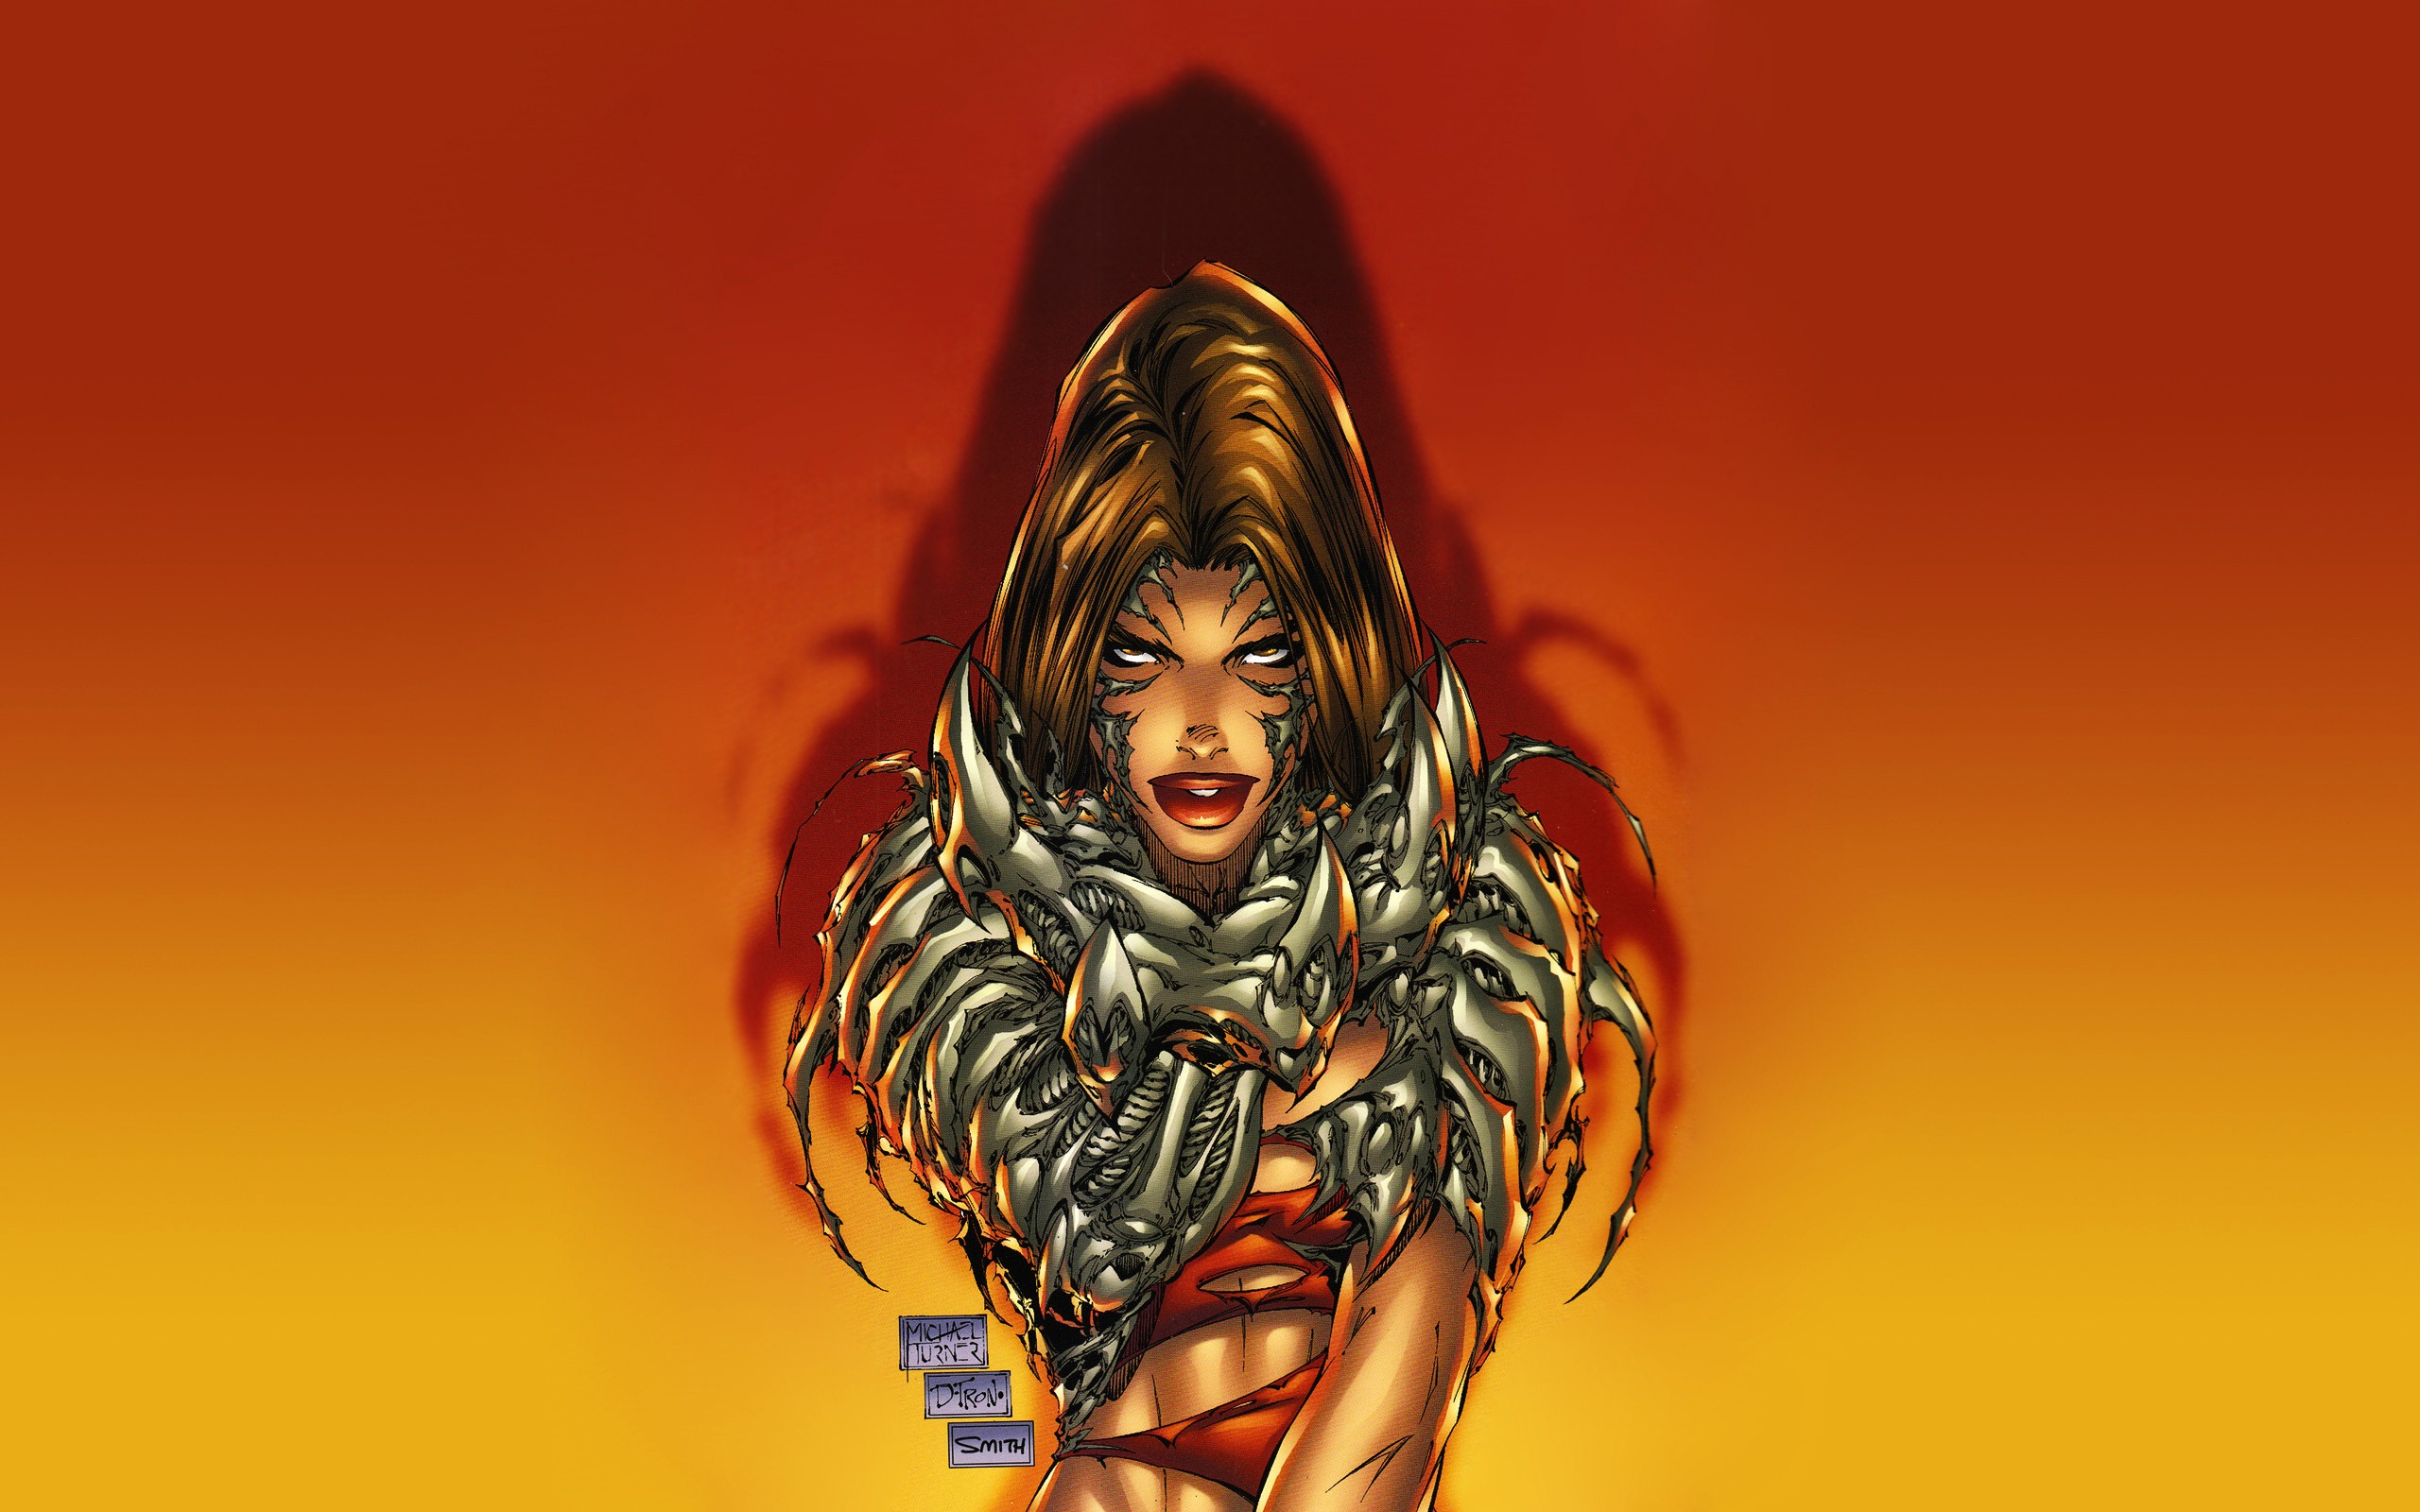 General 2560x1600 Witchblade comics Top Cow Sara Pezzini gradient Michael Turner fantasy girl women red lipstick artwork simple background digital art